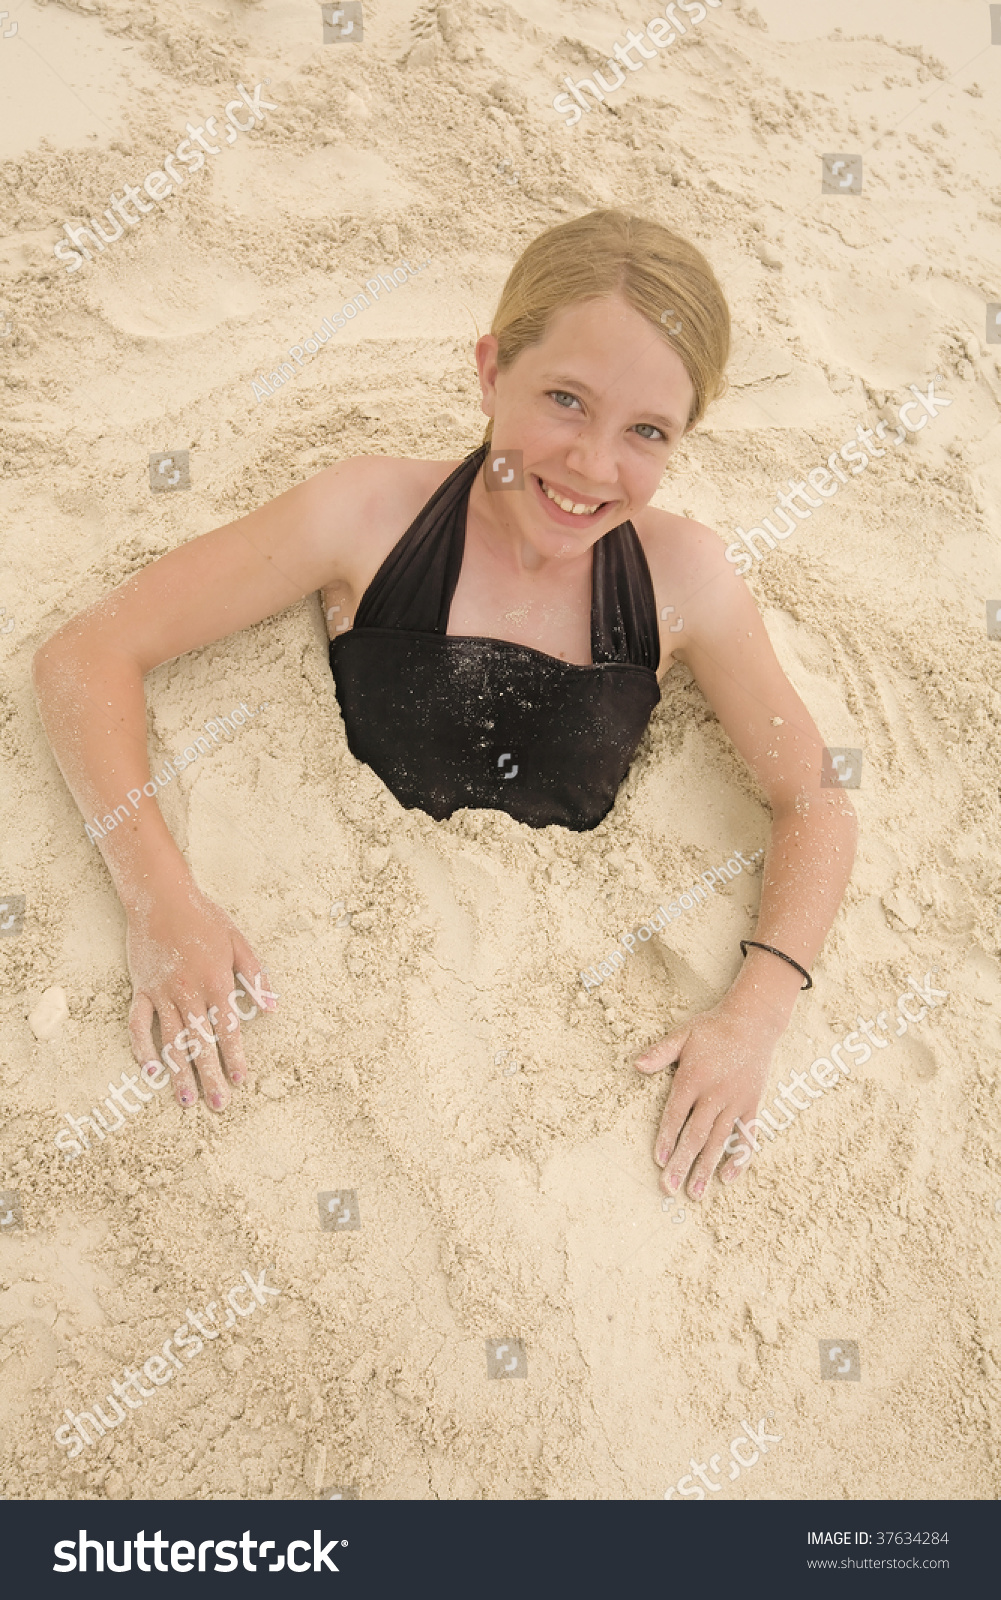 barbara meltzer add women buried in sand photo